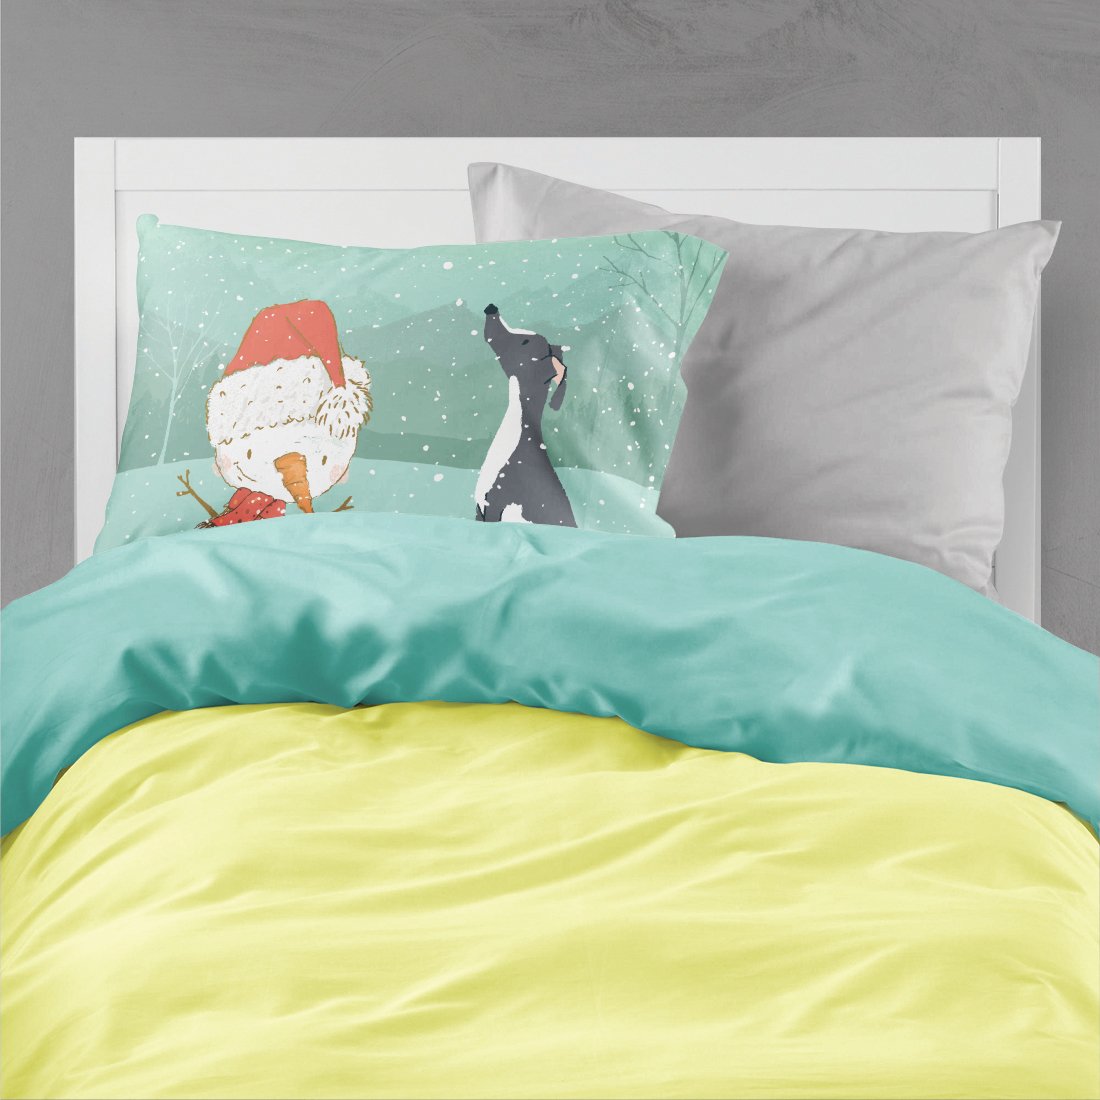 Black Greyhound Snowman Christmas Fabric Standard Pillowcase CK2044PILLOWCASE by Caroline's Treasures